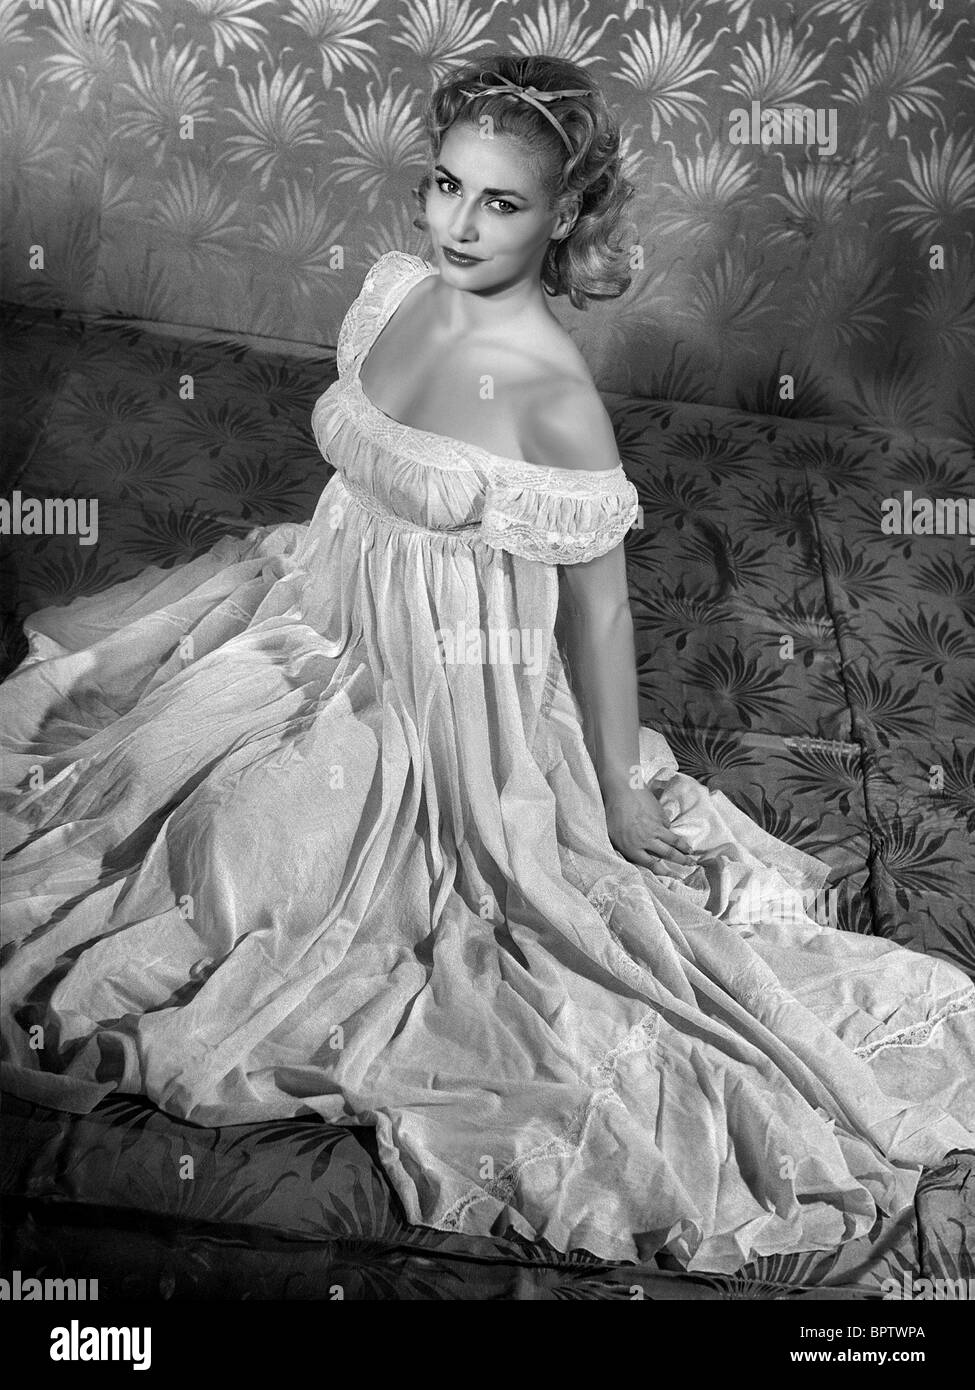 elga-andersen-actress-1952-BPTWPA.jpg